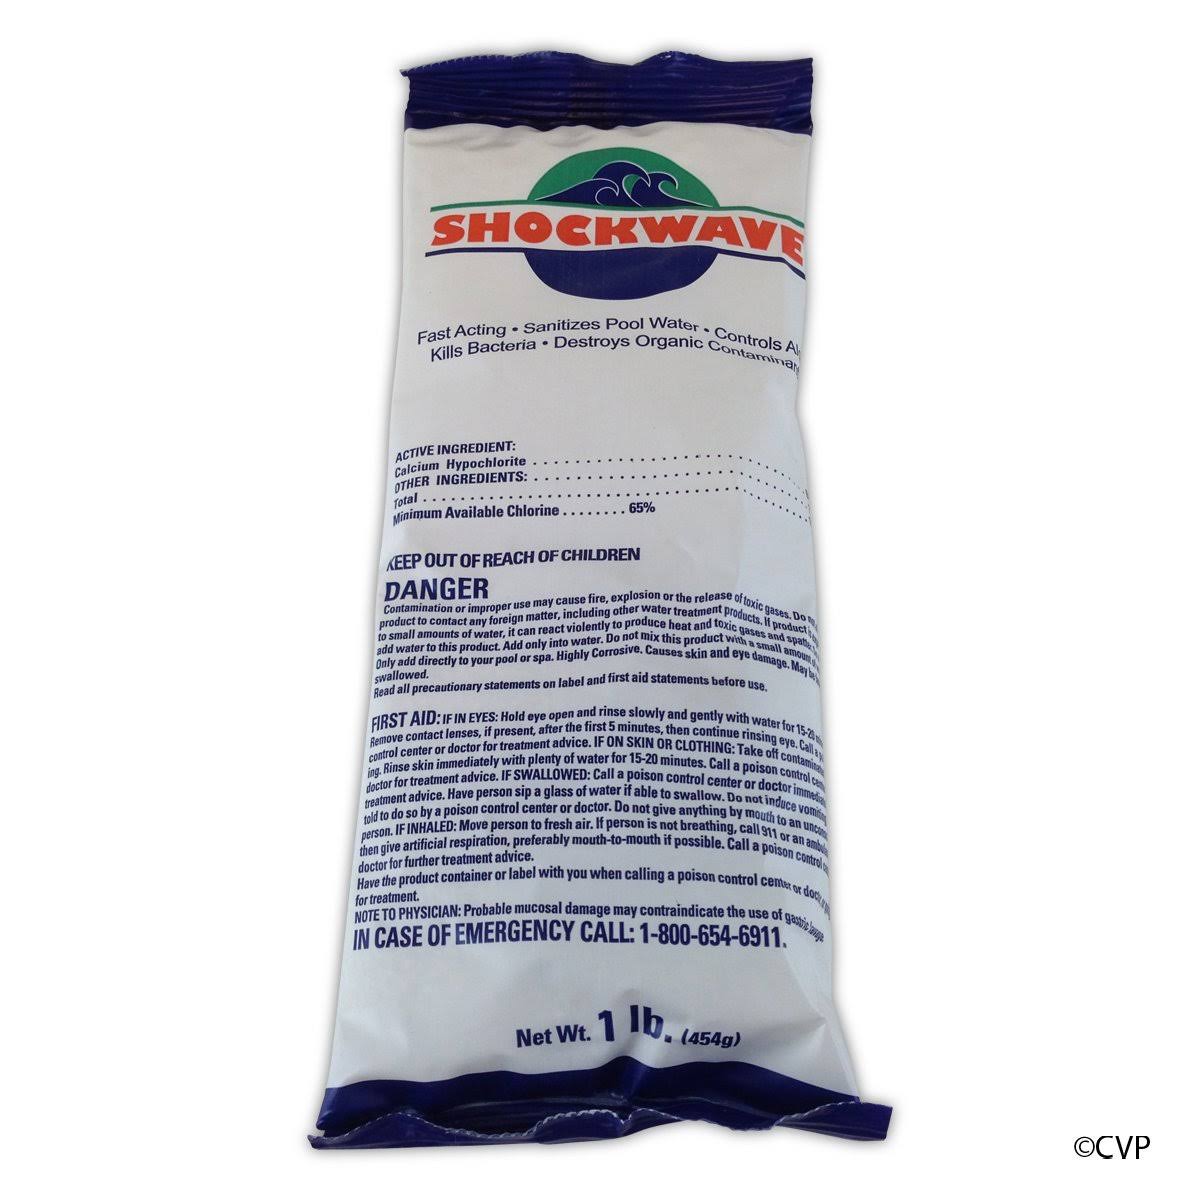 Shockwave Calcium Hypochlorite Pool Shock, 68% - 1 lb bag